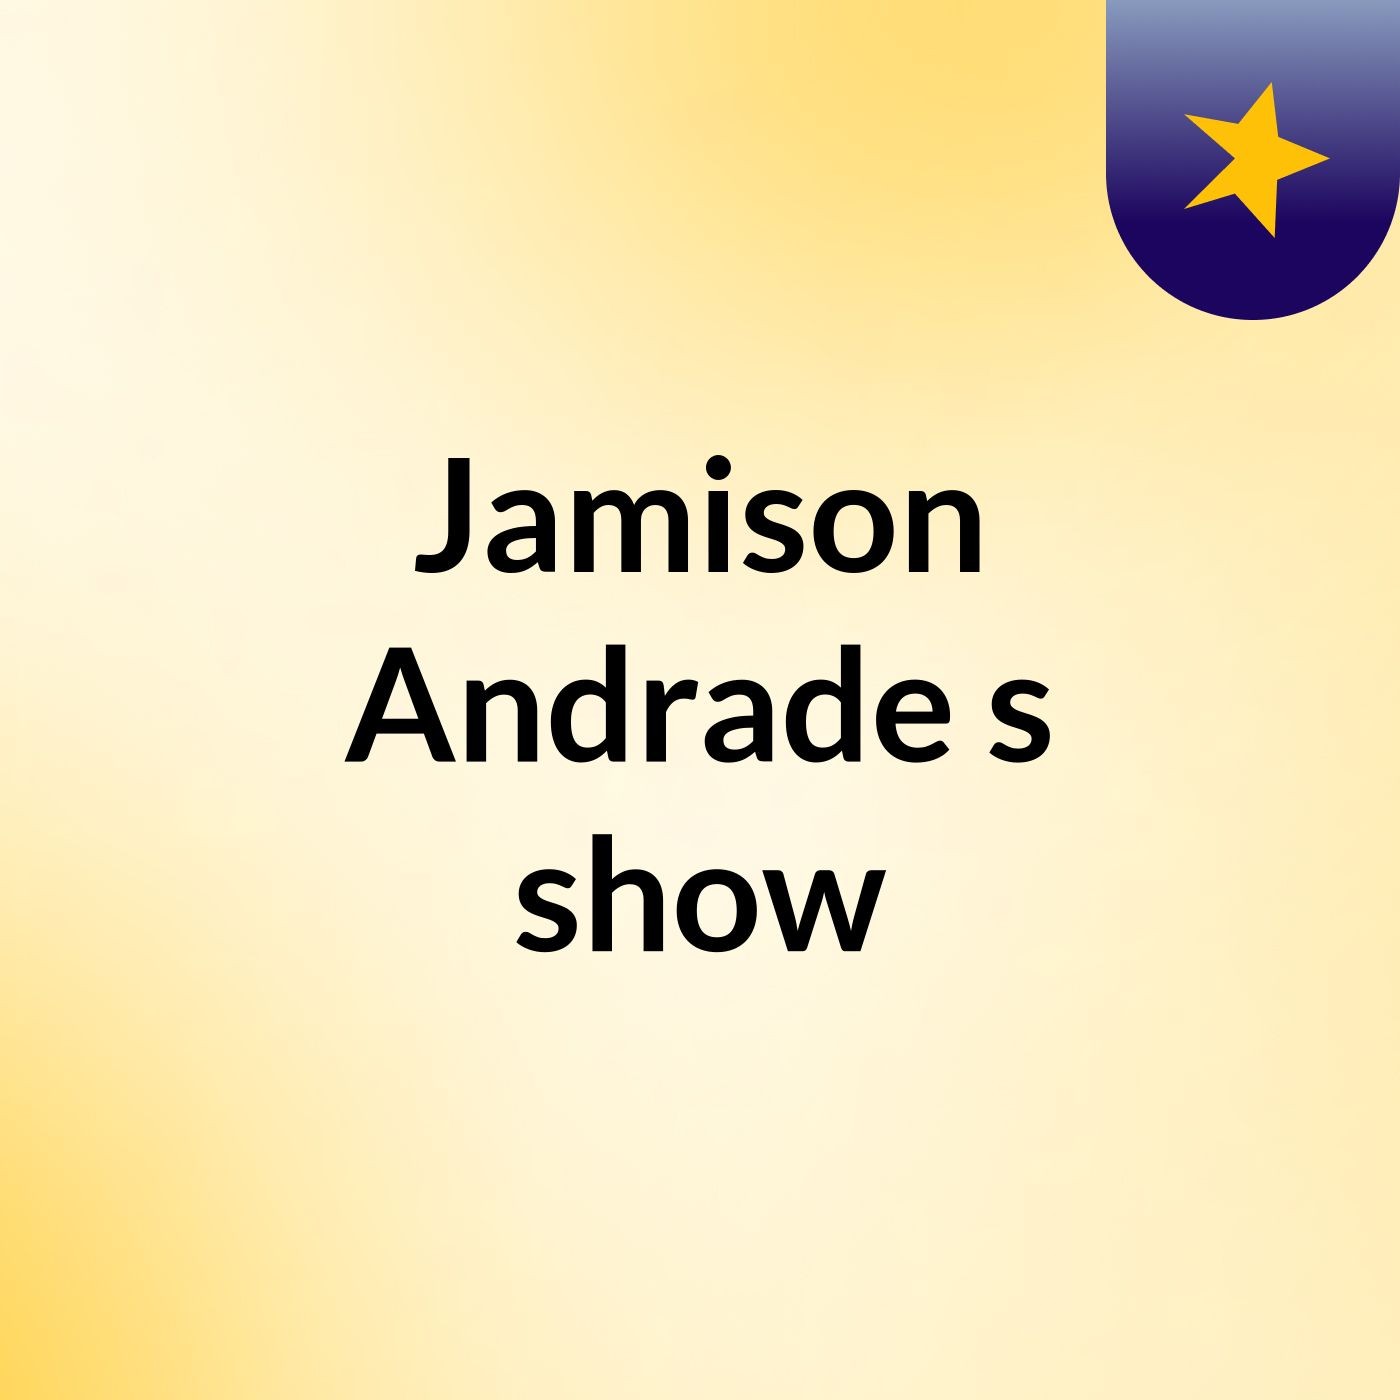 Jamison Andrade's show